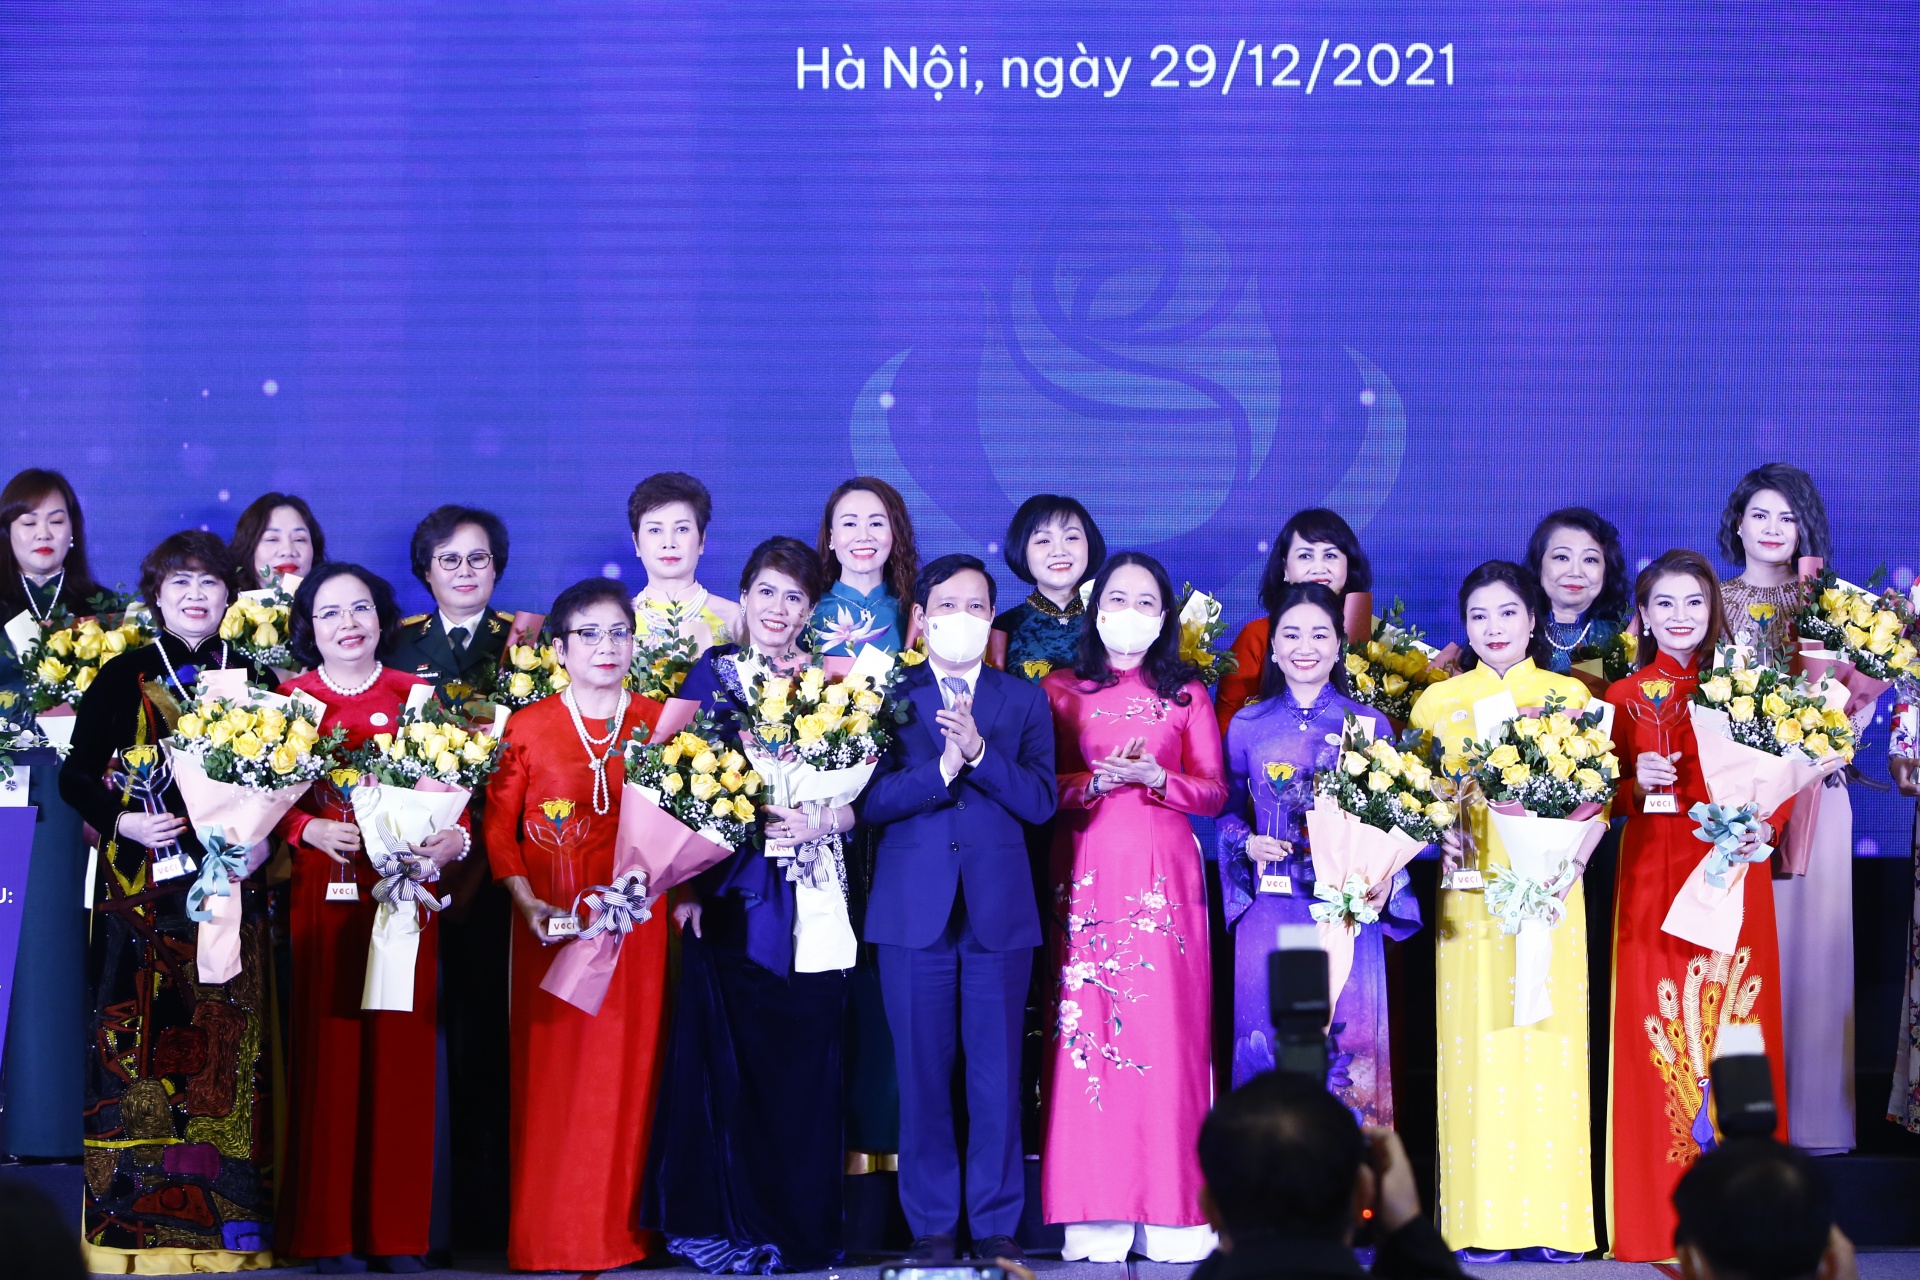 Typical businesswomen receive the Golden Rose Award in 2021 